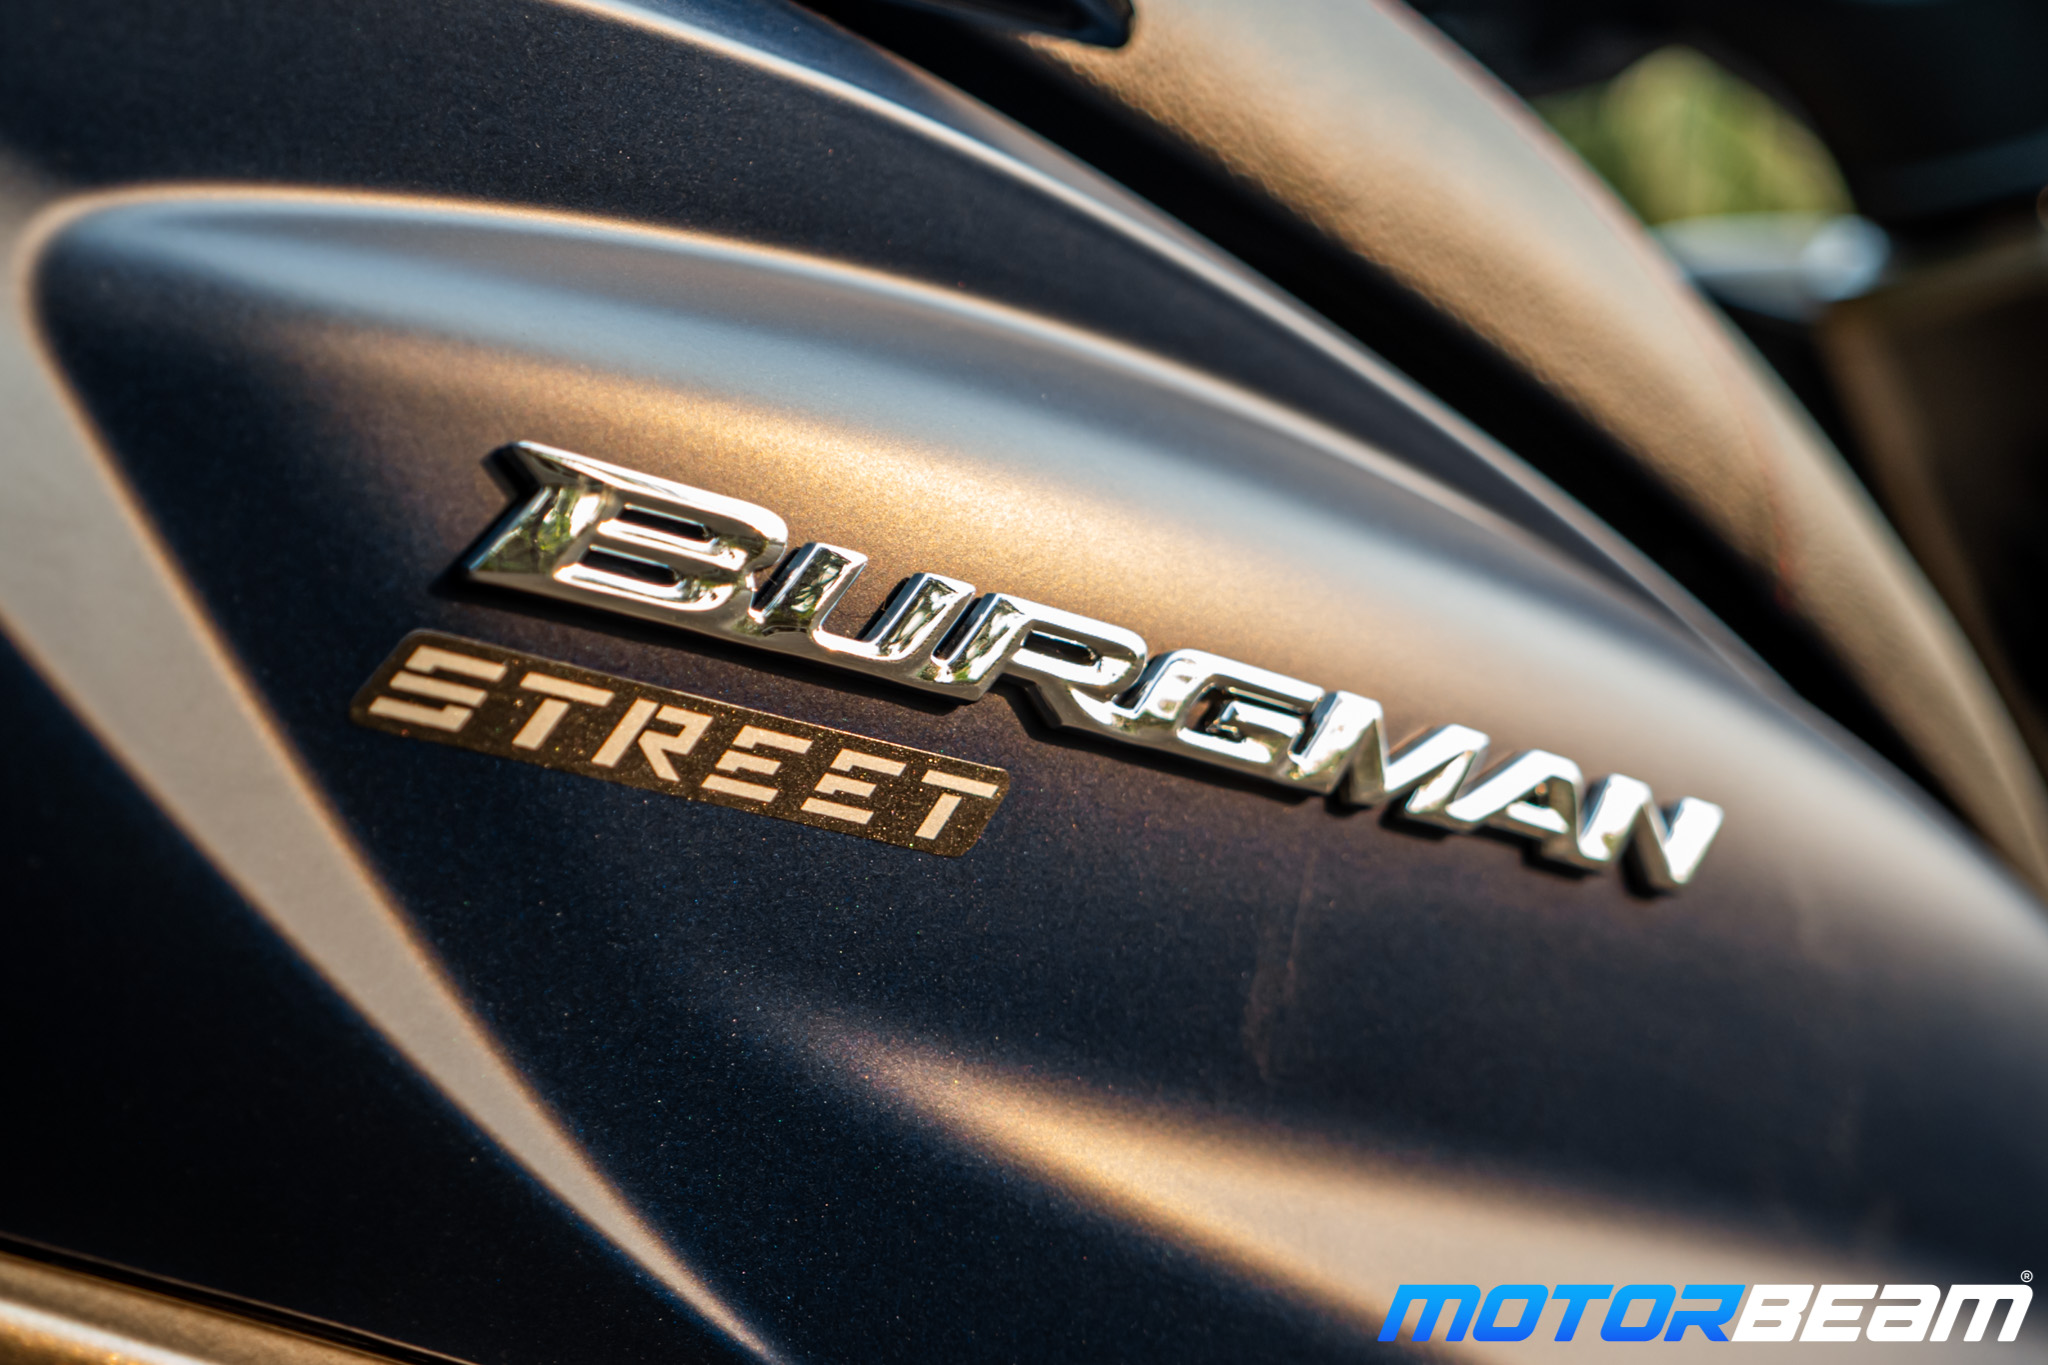 2020 Suzuki Burgman Street Review 18